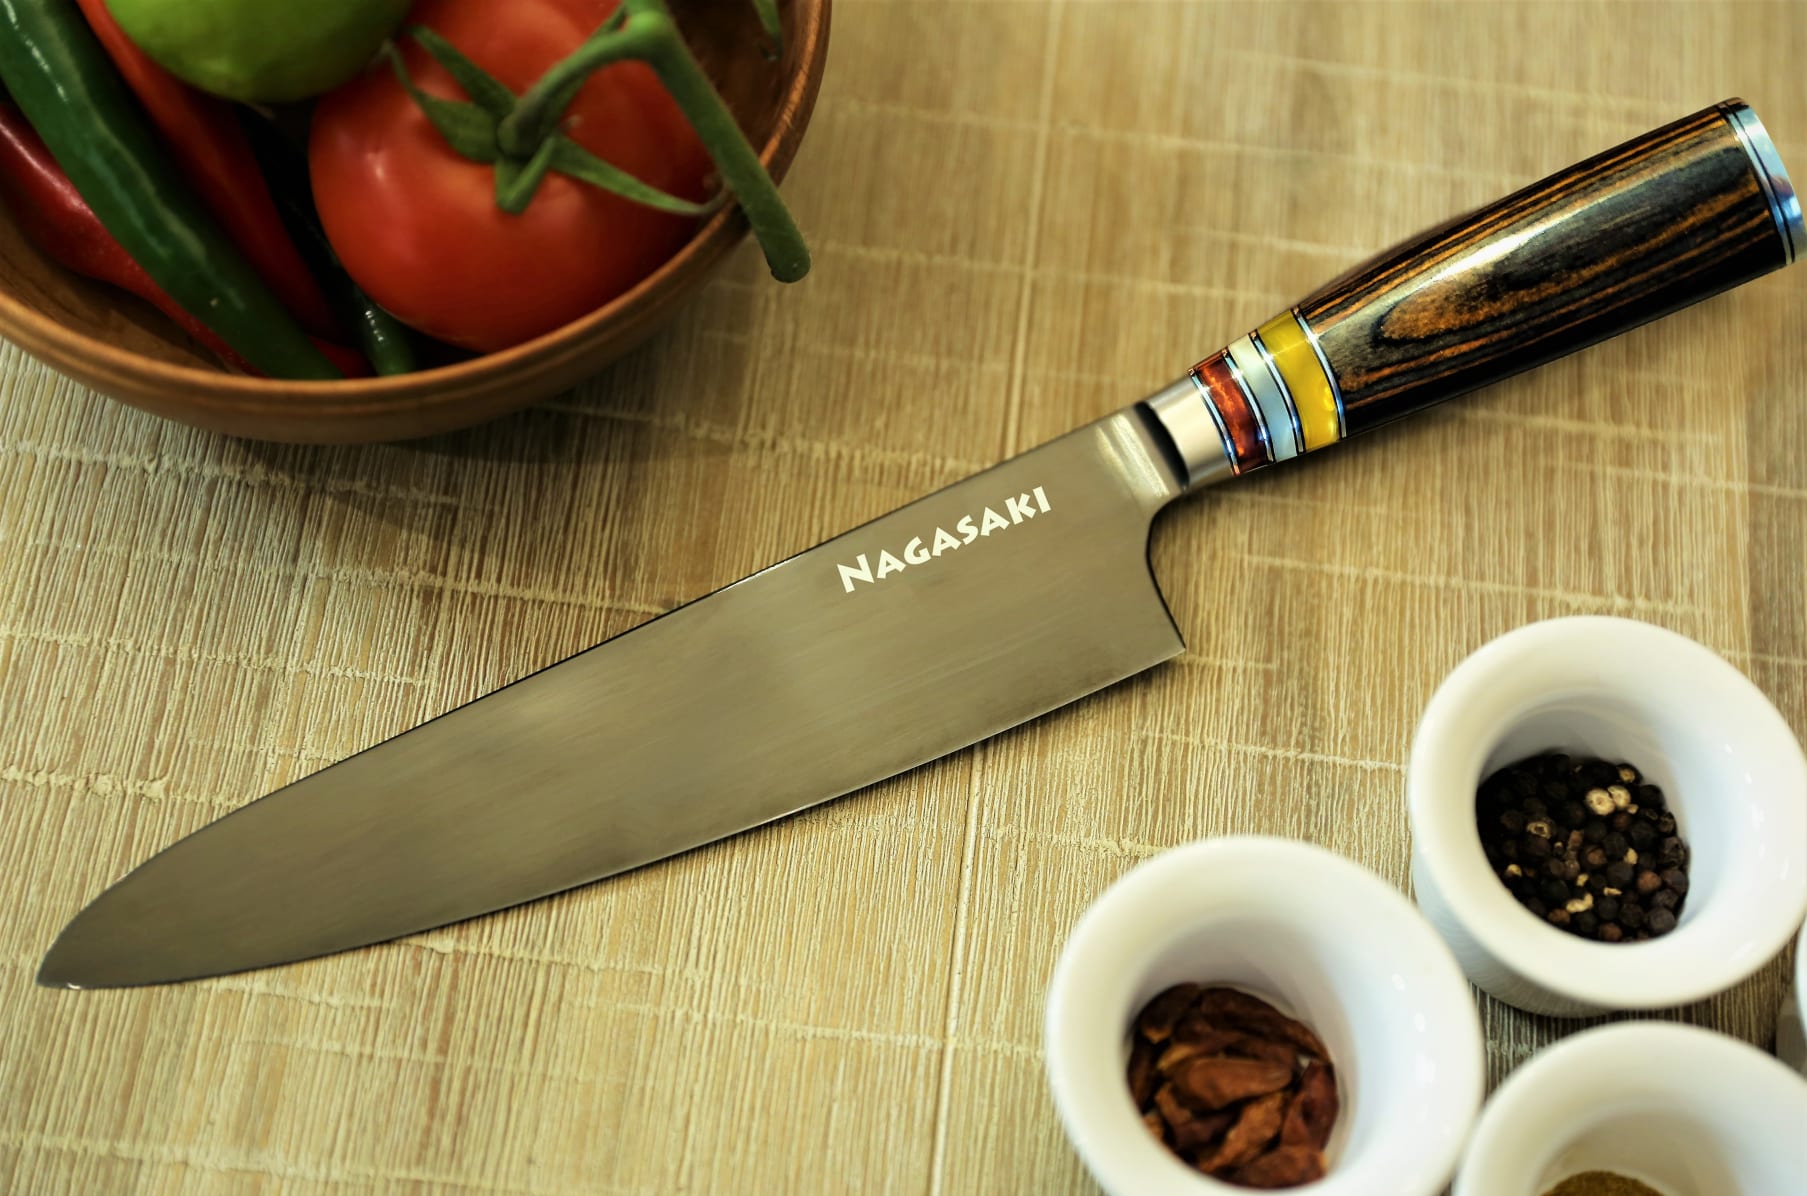 Nagasaki Knife Edition - Titanium coated sharp knife series by